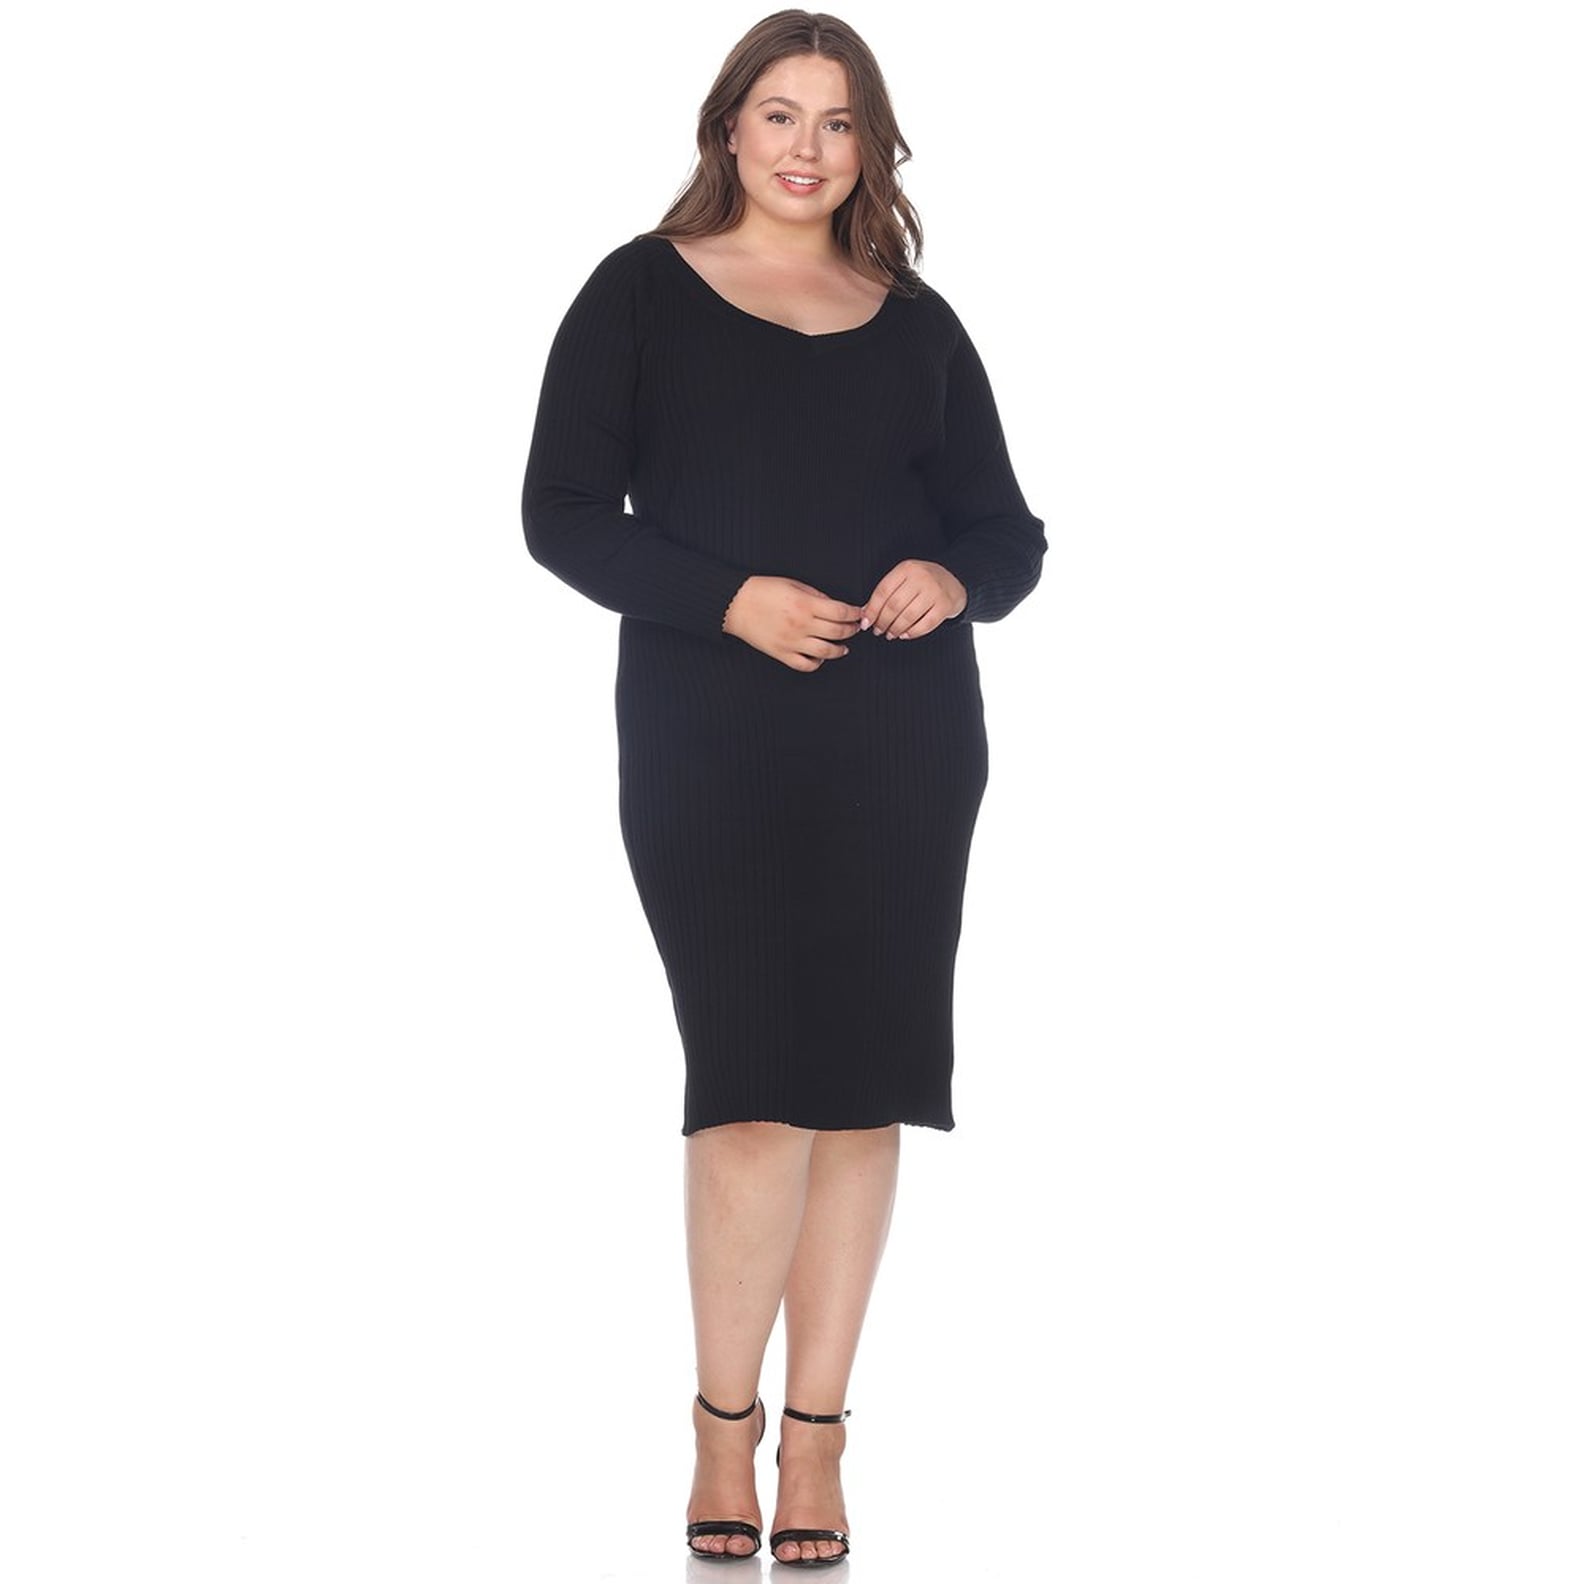 Kylie Jenner's Black Maxi Dress Is a Fall Staple, Hands Down | POPSUGAR ...